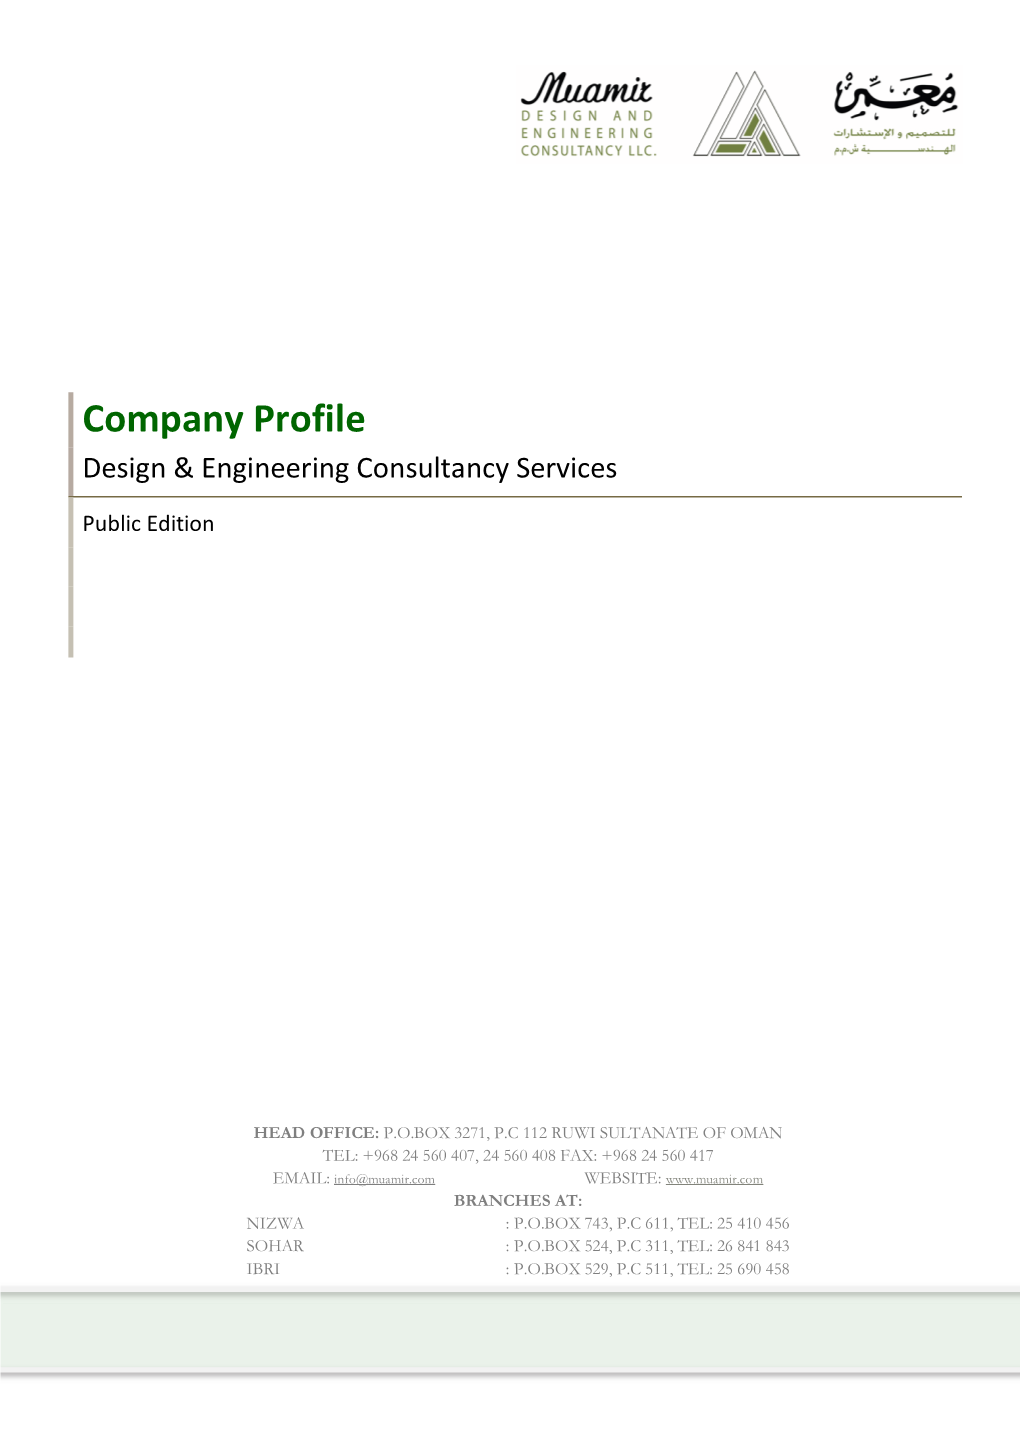 Company Profile Design & Engineering Consultancy Services